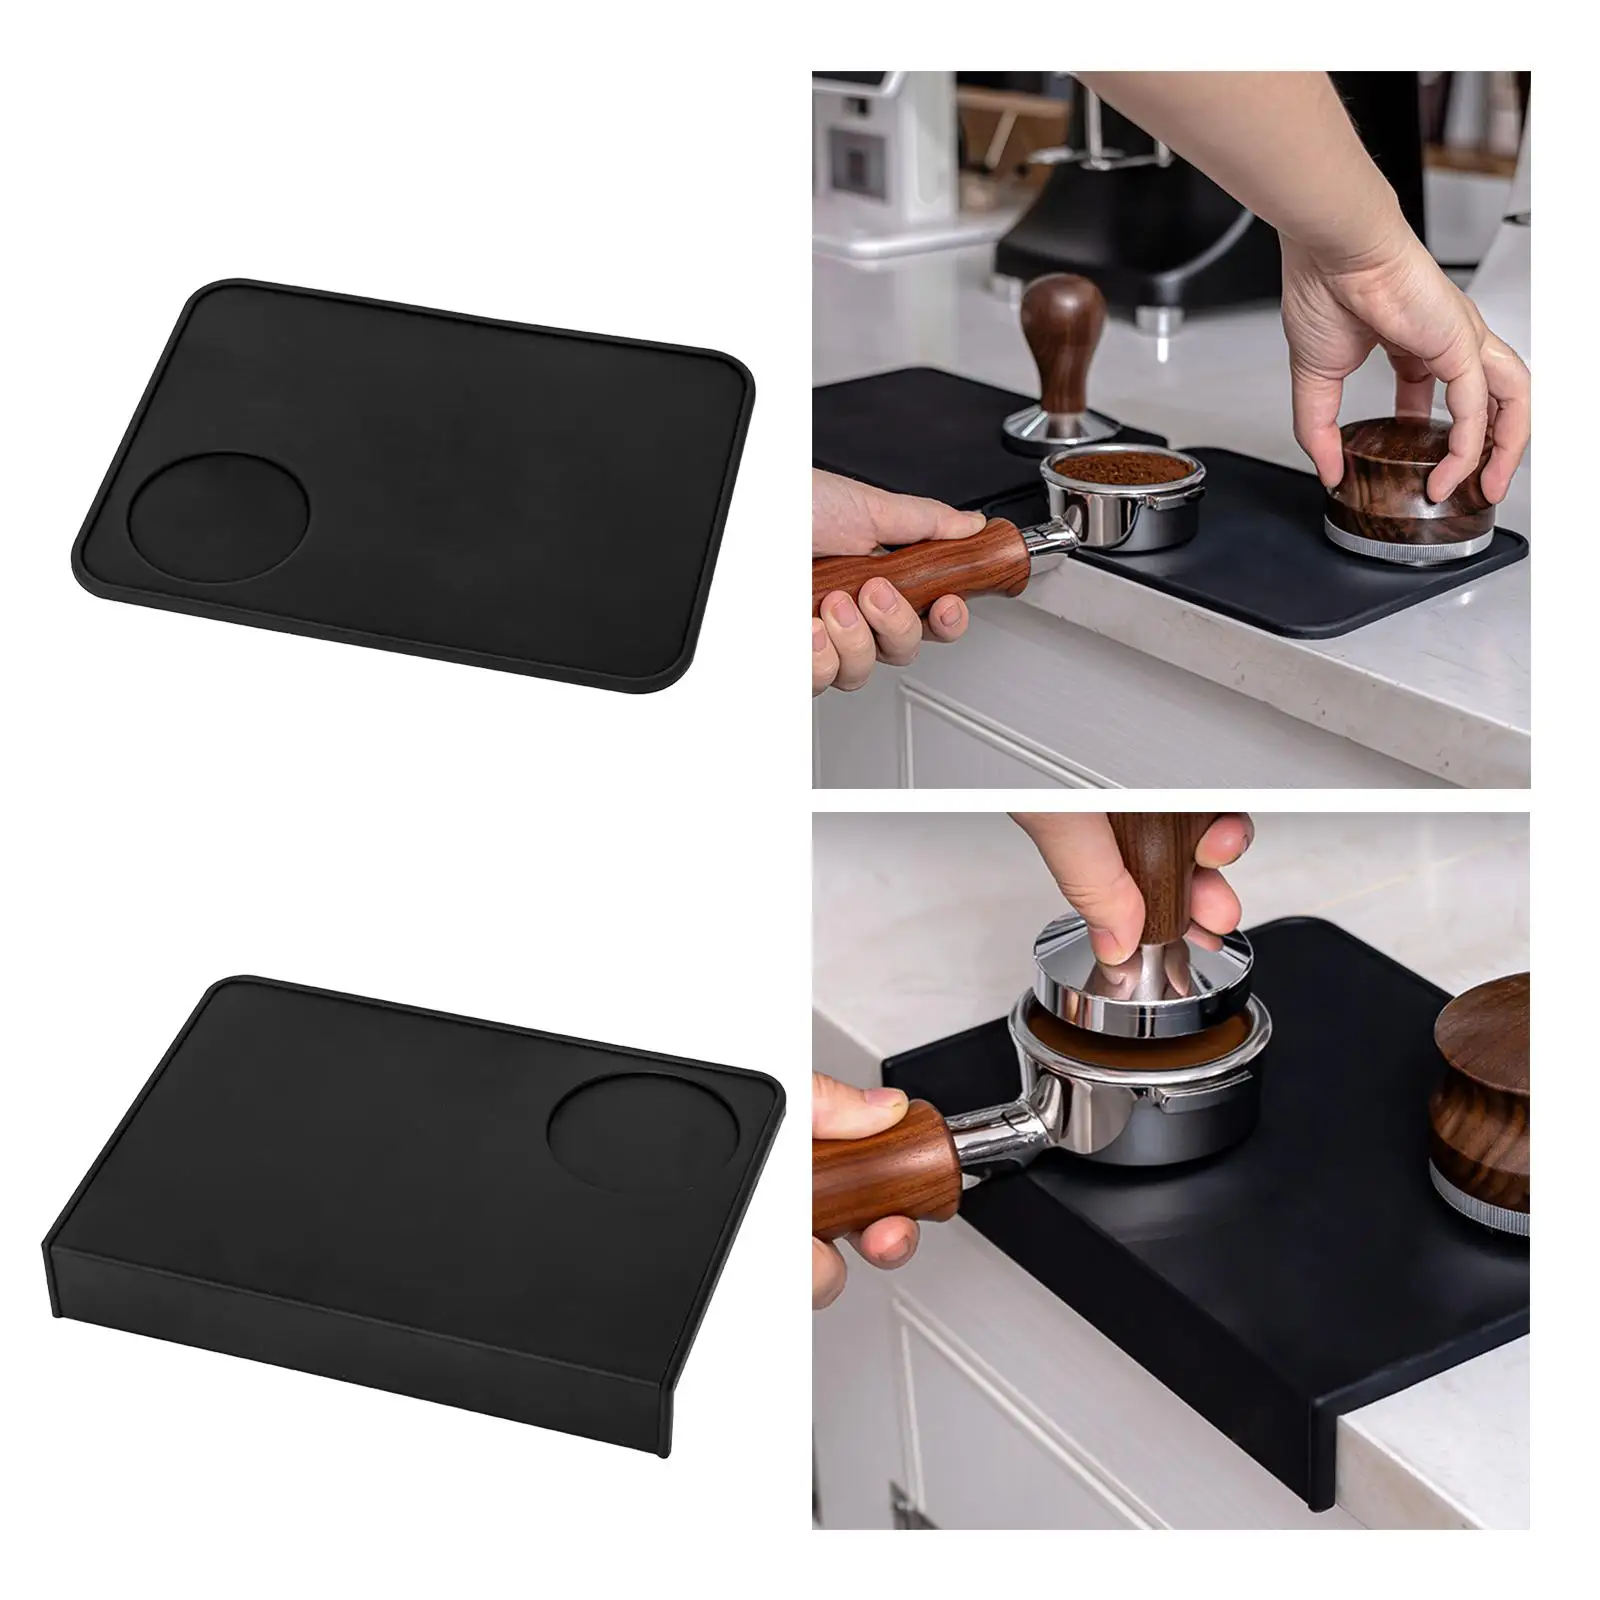 Coffee Tamper Pad Coffee Utensils Coffee Powder Tamper Rest Mat Multifunction Household for Coffee Shop Kitchen Worktop